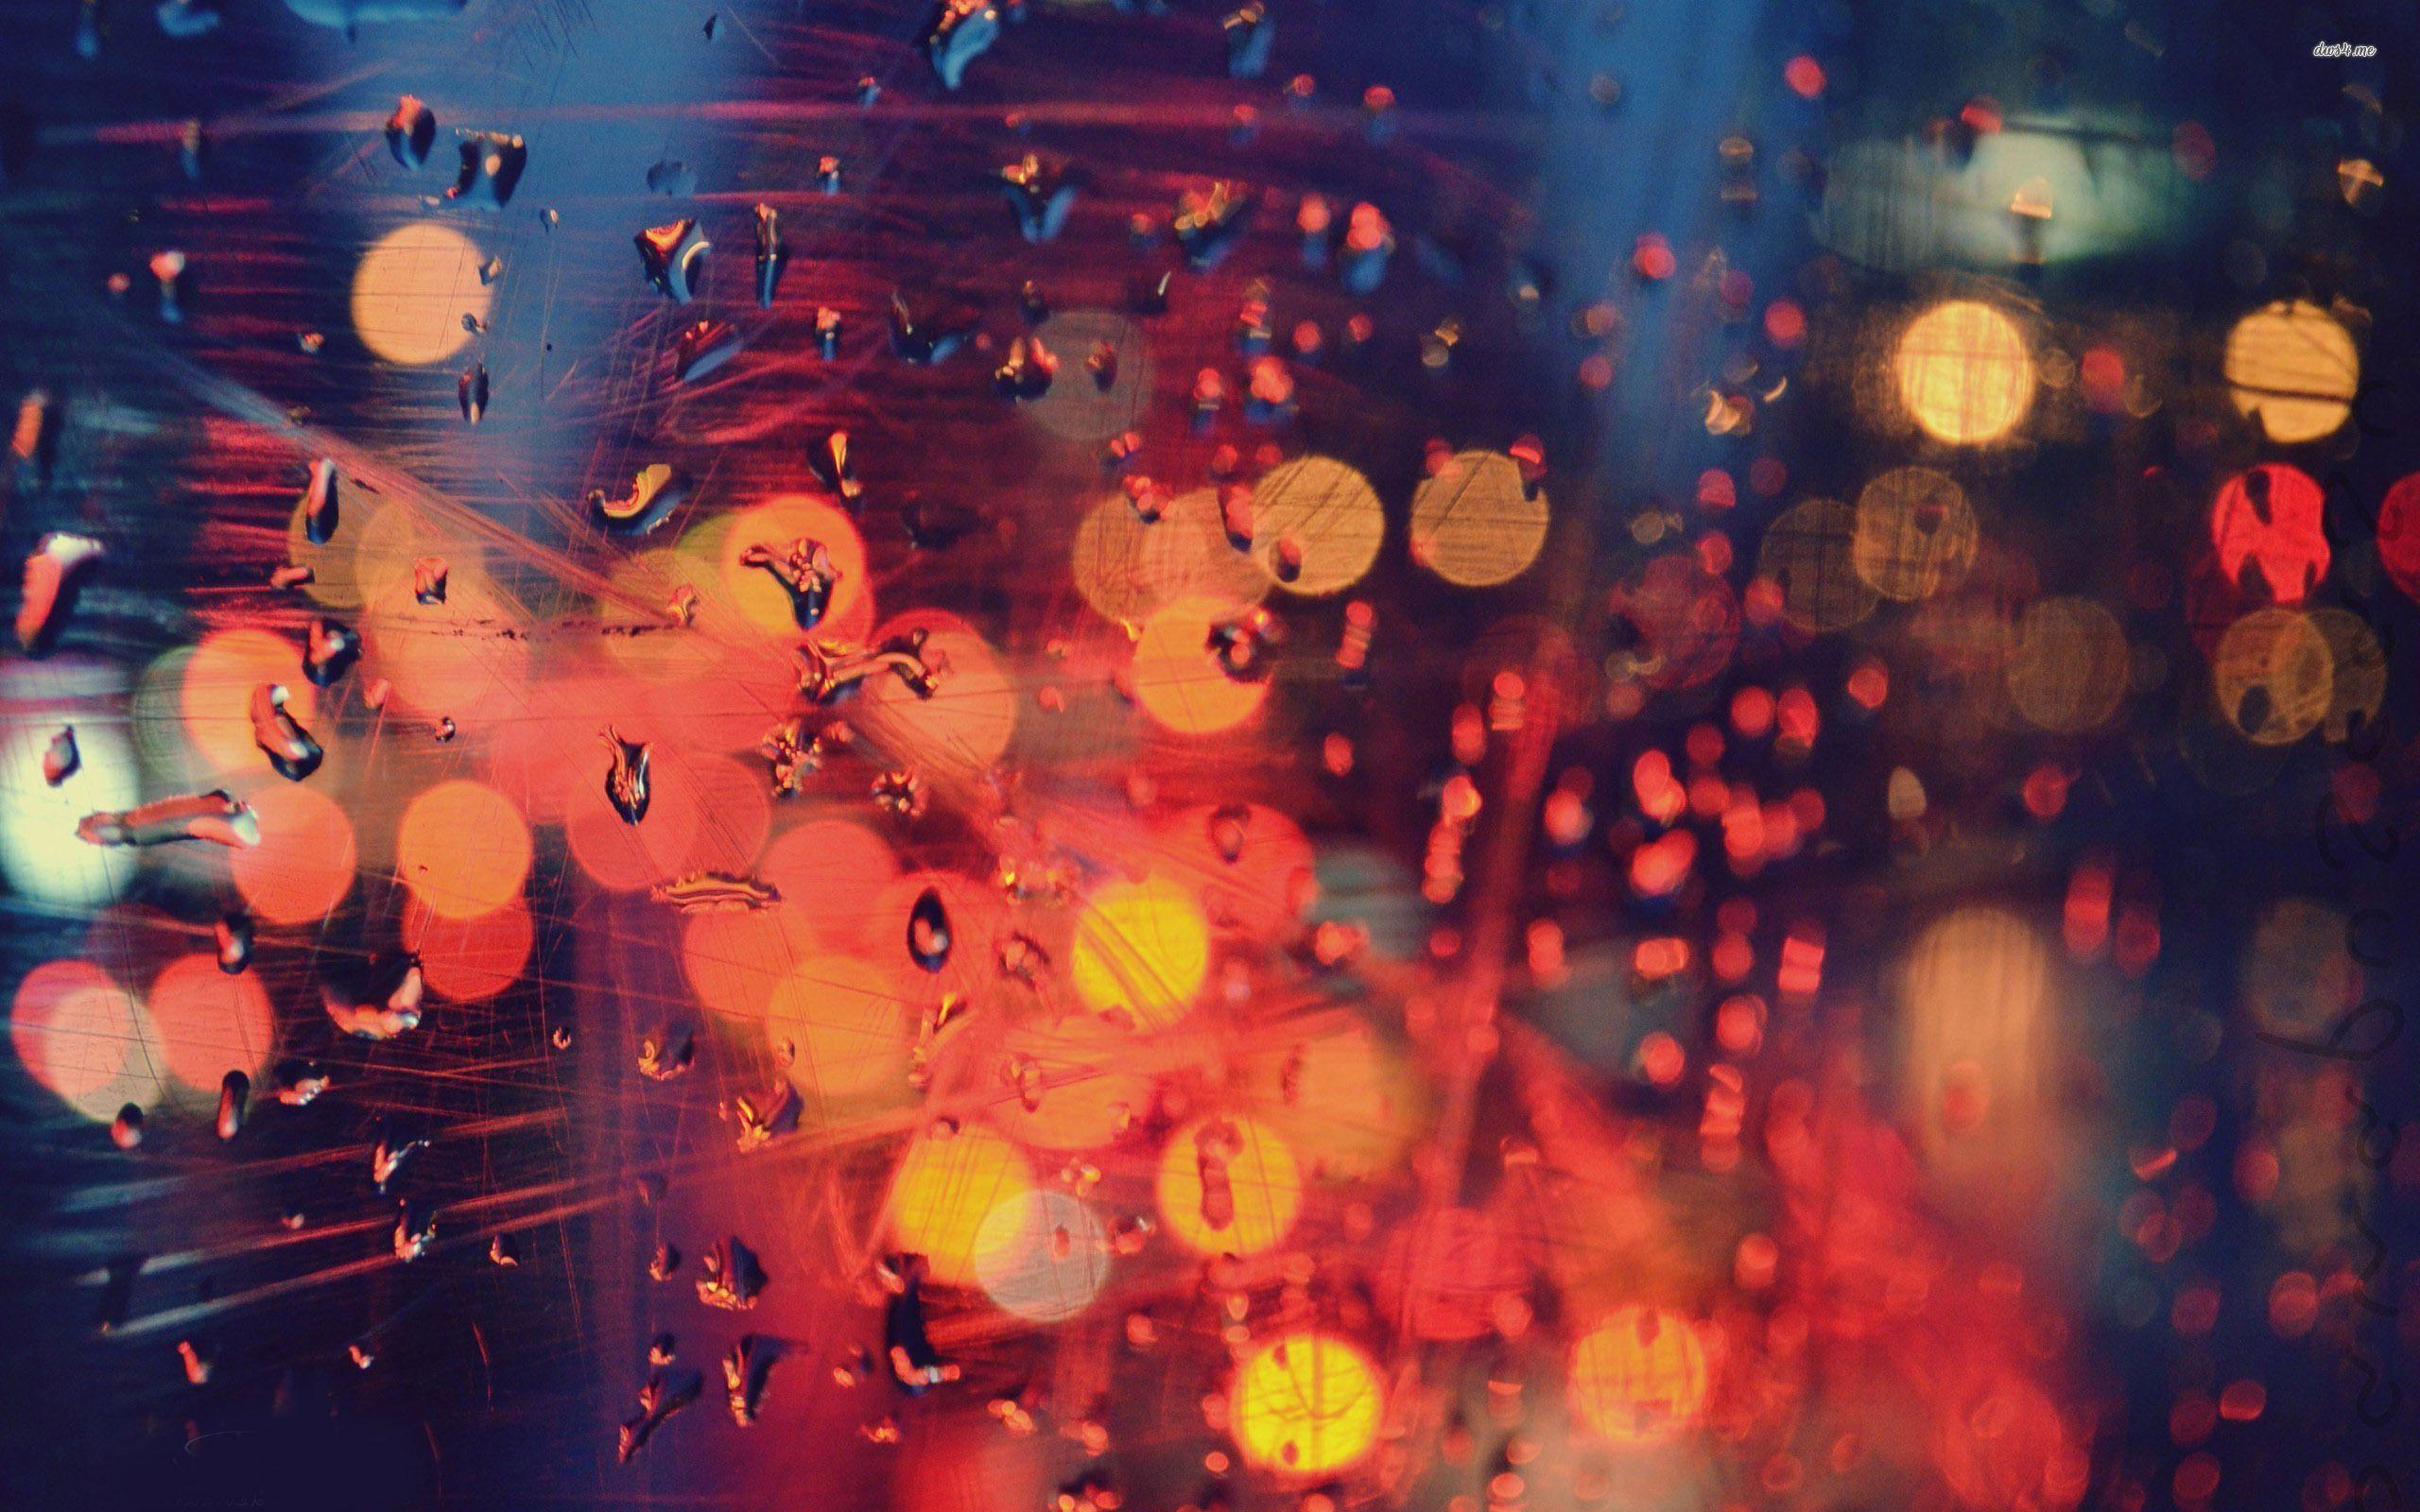 City lights beyond the rainy window wallpaper